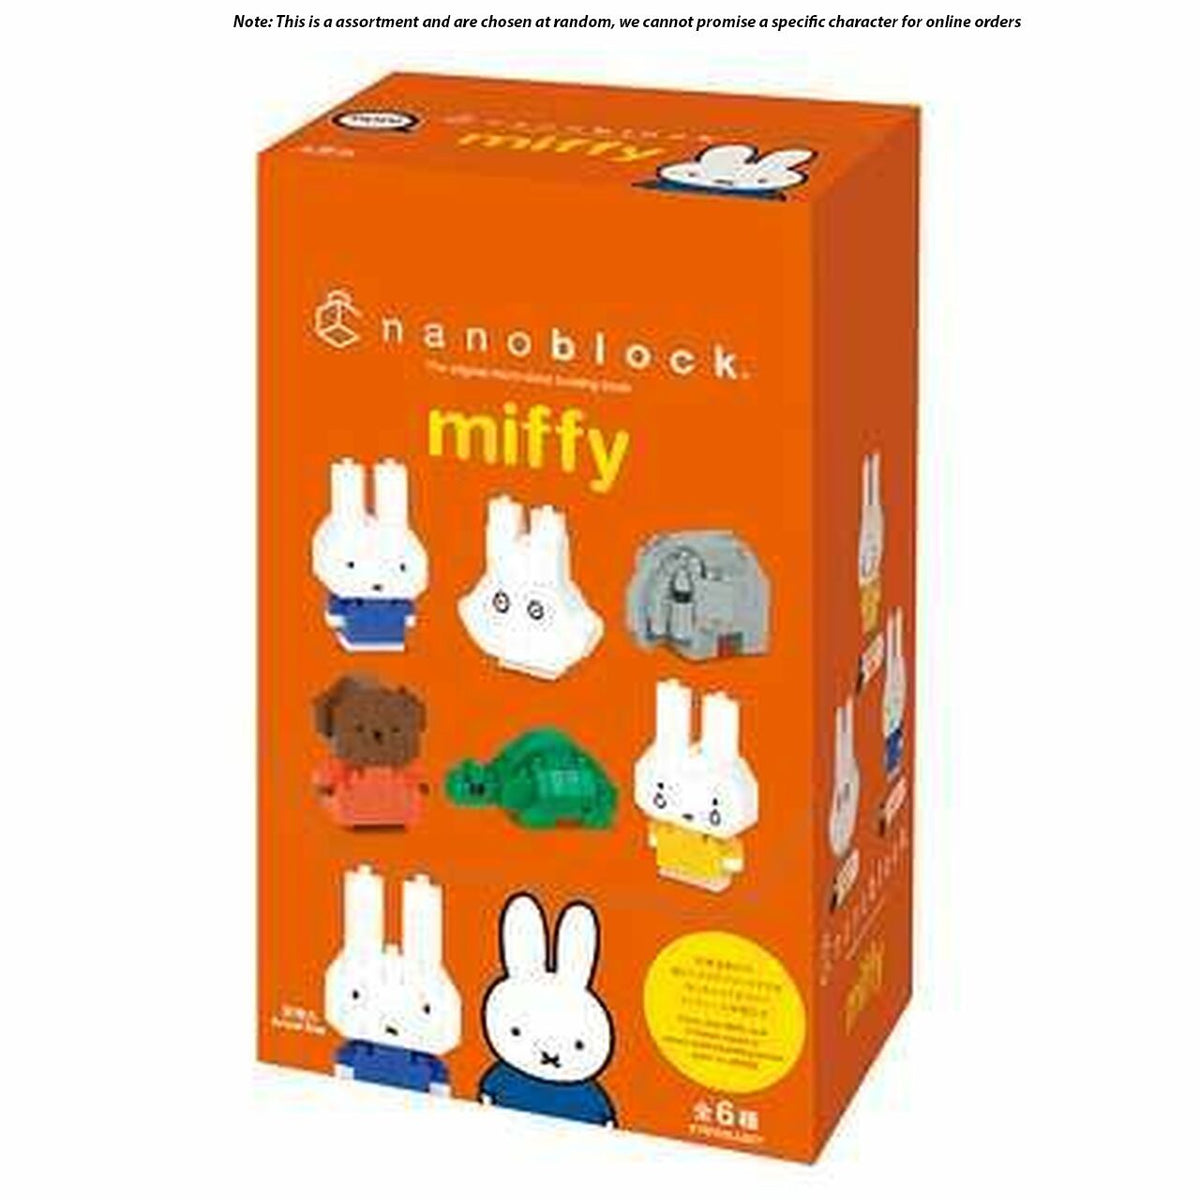 Nanoblocks - Miffy Vol. 1 Assorted Characters